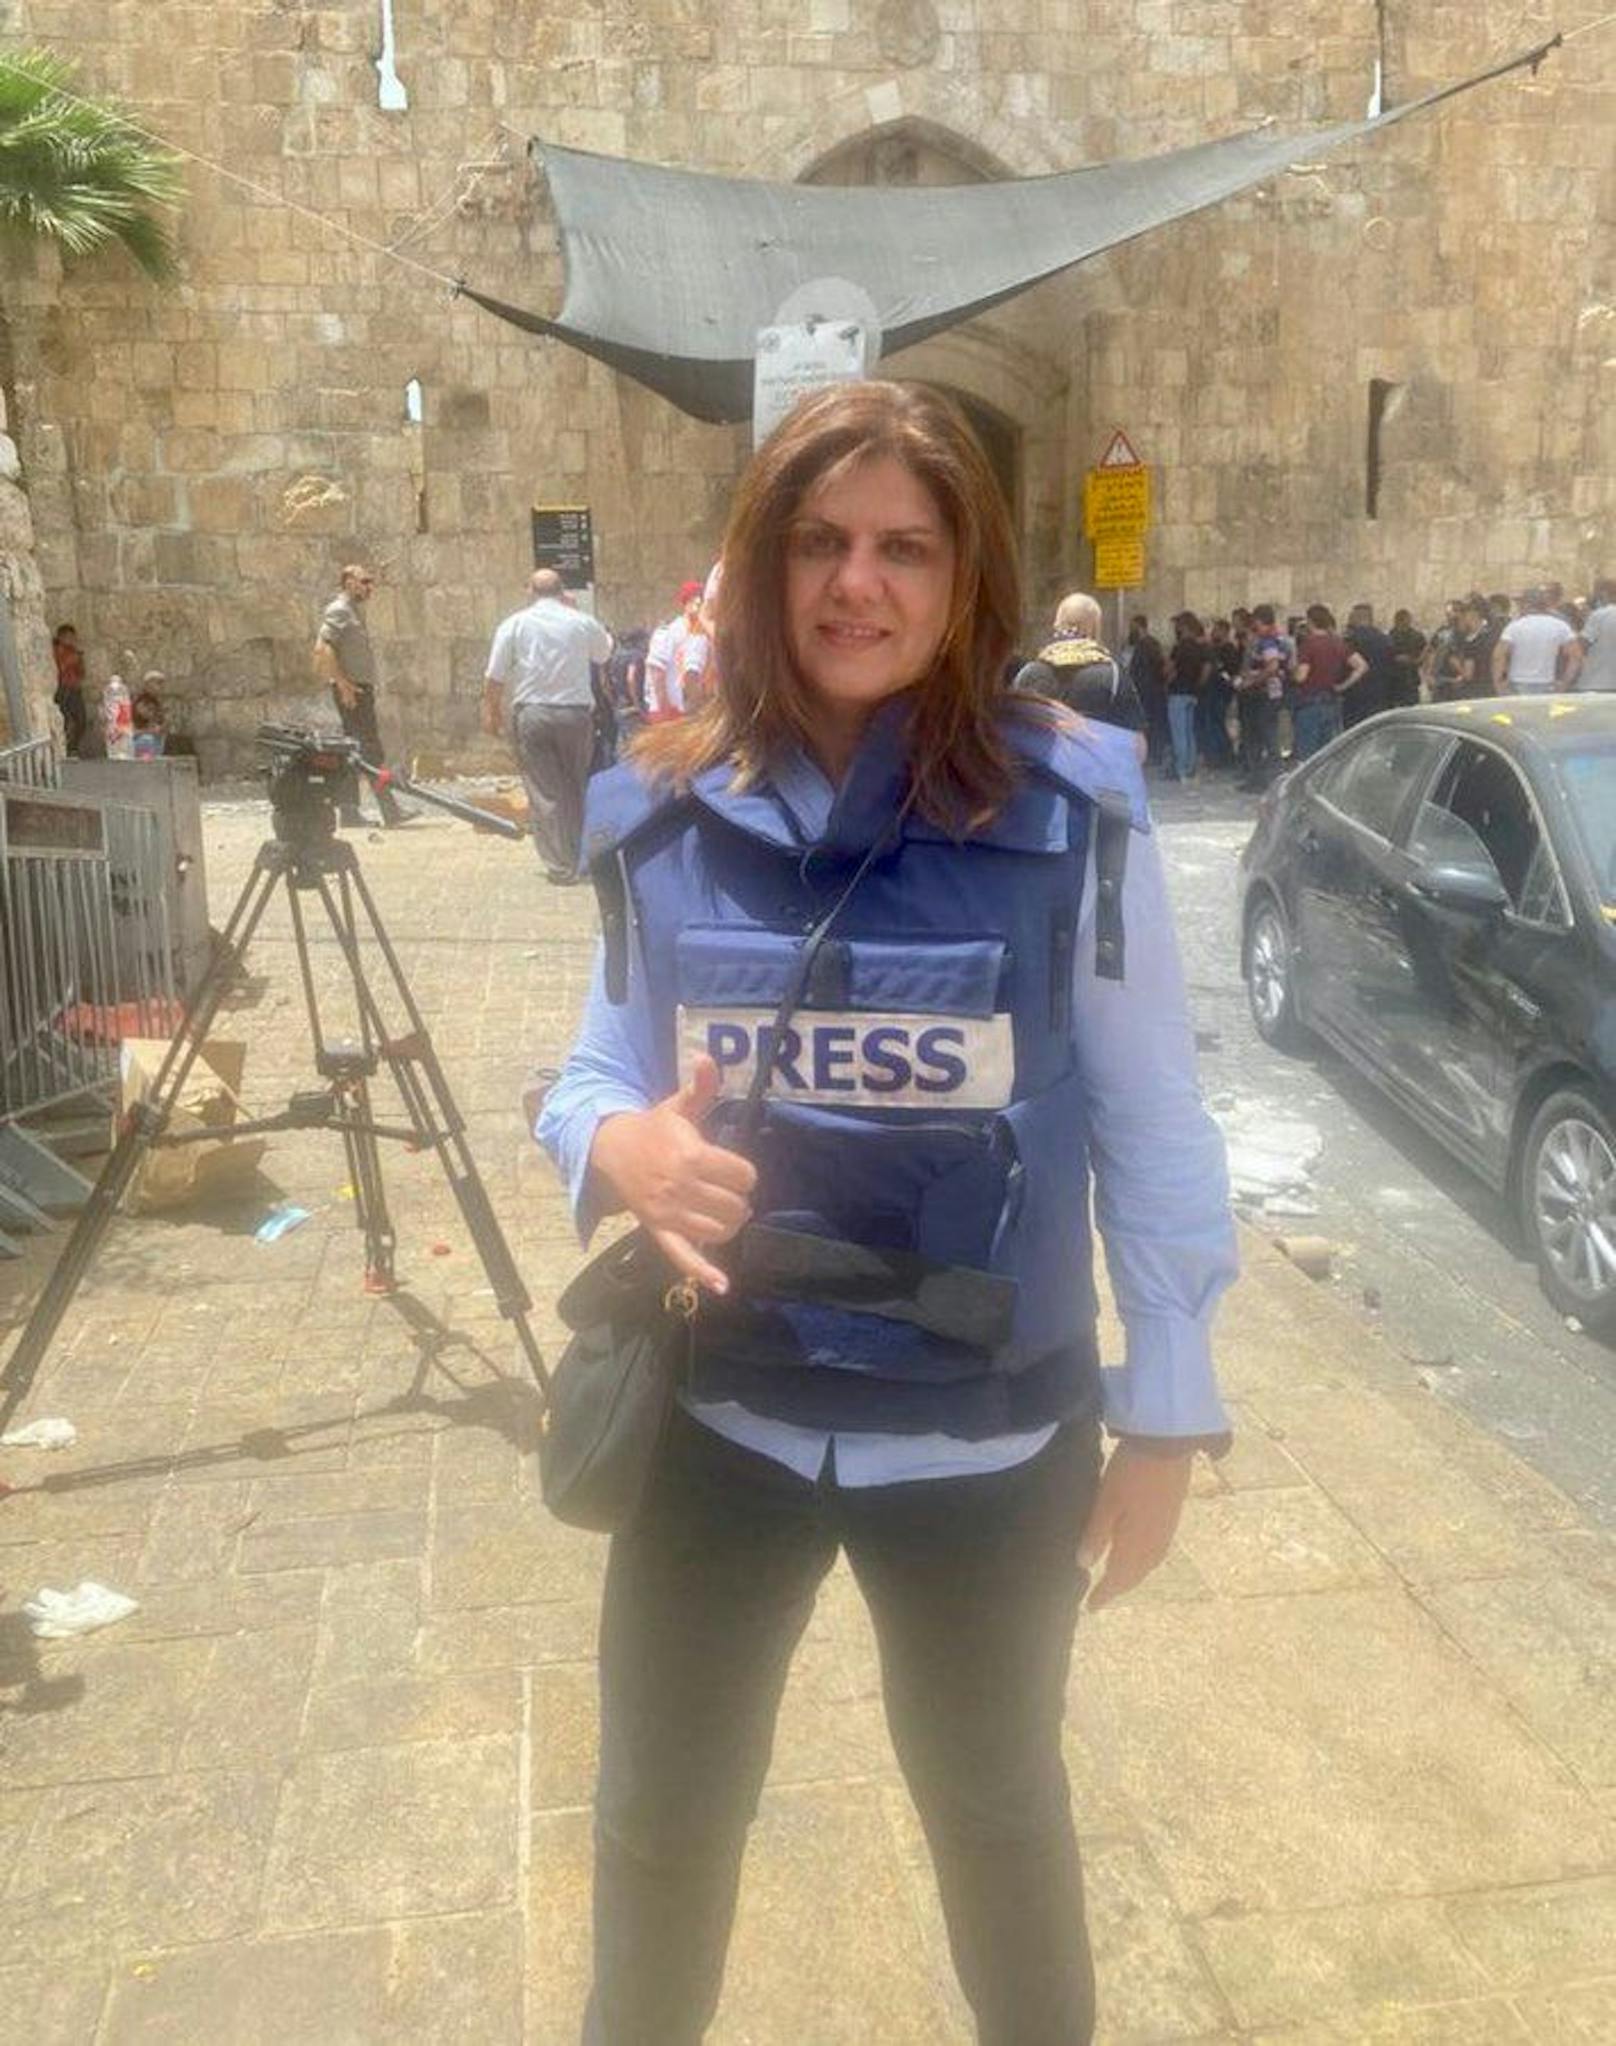 ORF-Star: Erschossene Journalistin war "absolute Ikone"